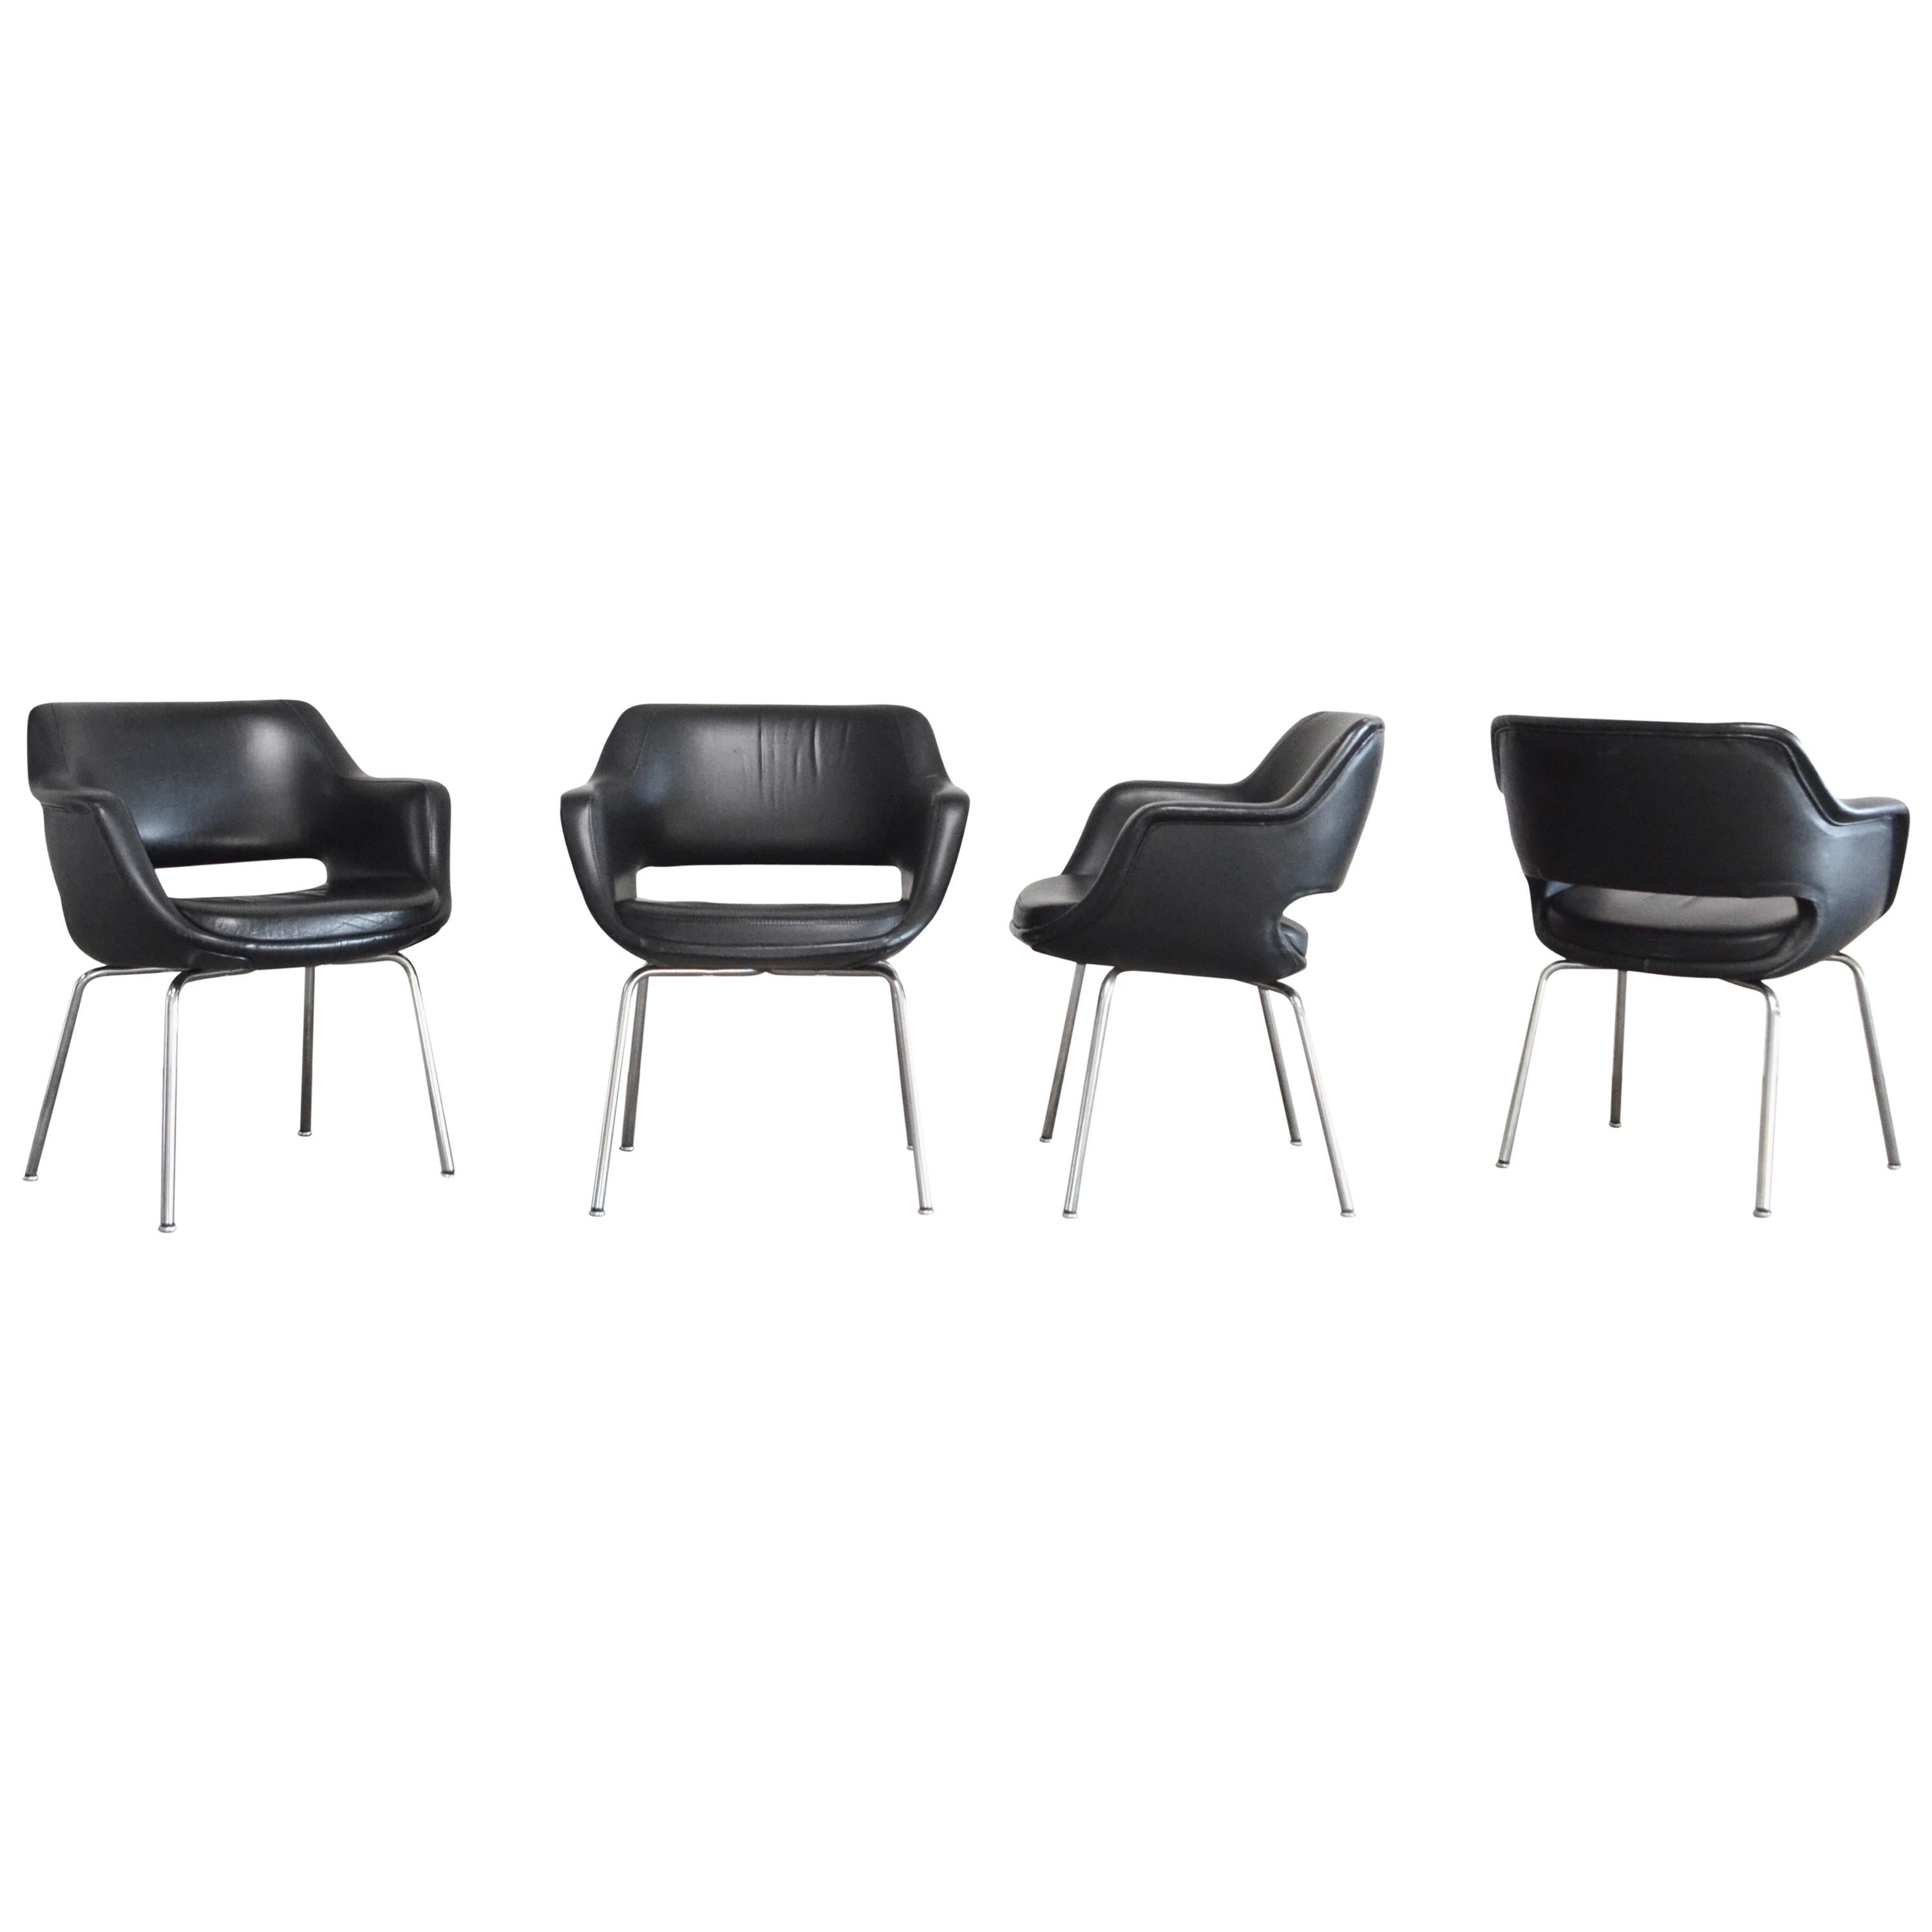 Olli Mannermaa Set of 4 Leather Kilta Chair by Eugen Schmidt & Cassina Martela For Sale